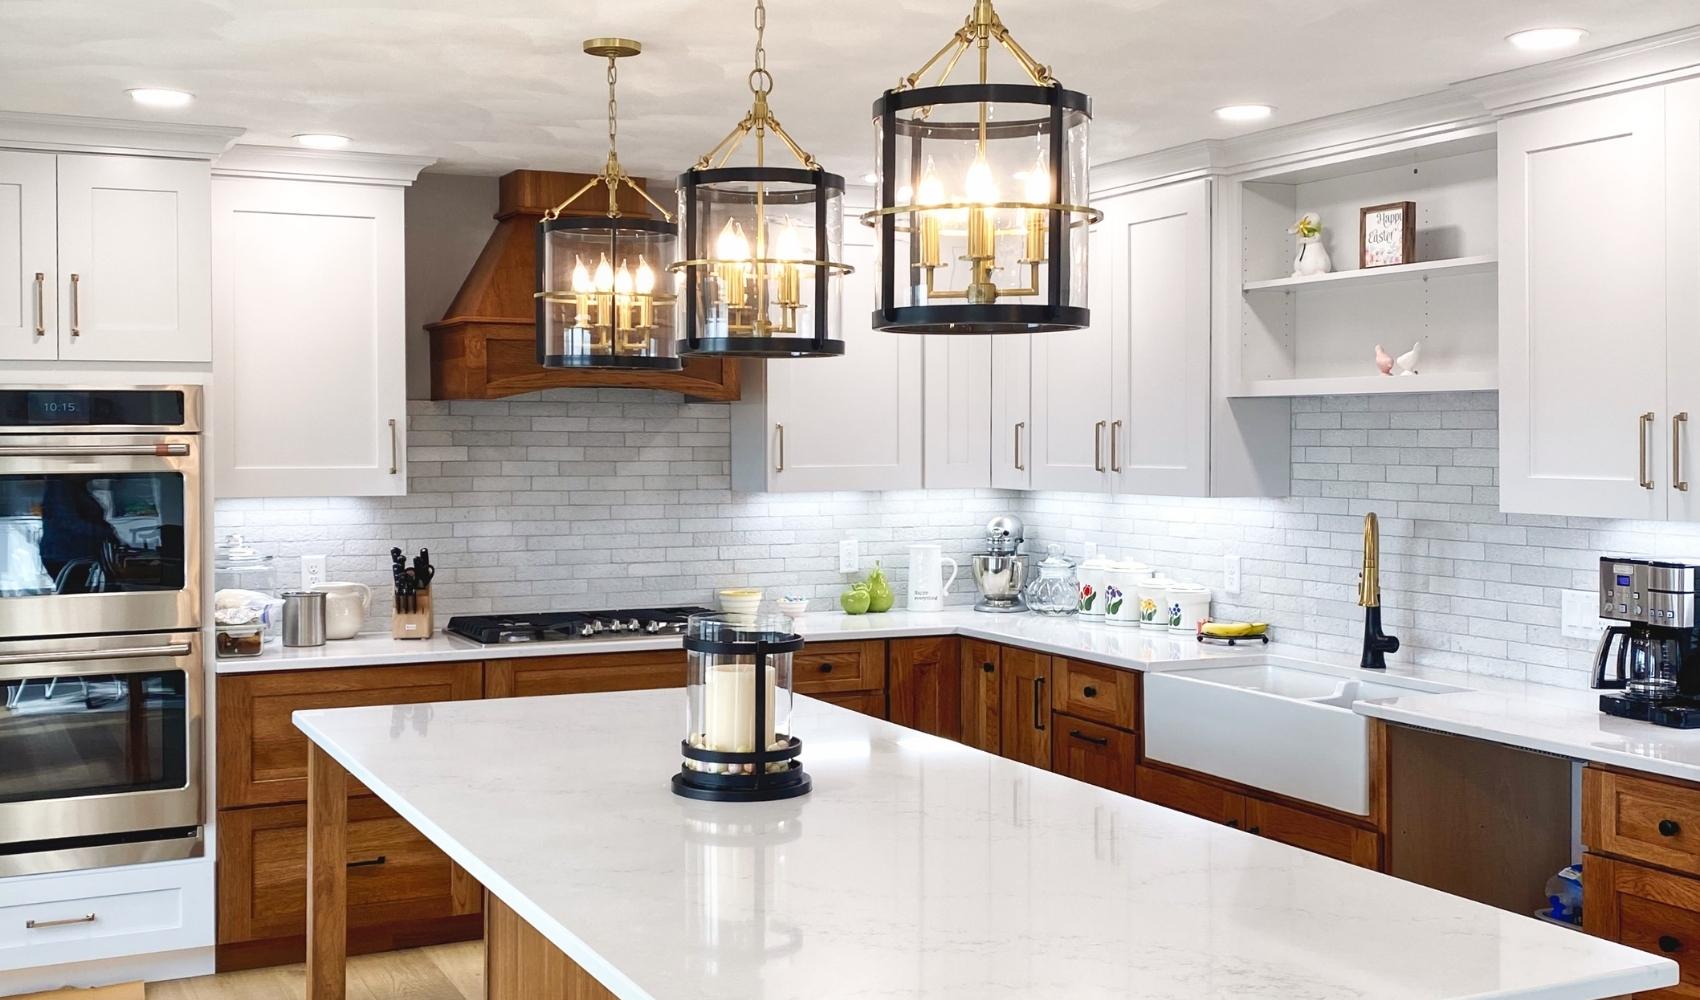 kitchen design with island, quartz countertop, and subway tile backsplash